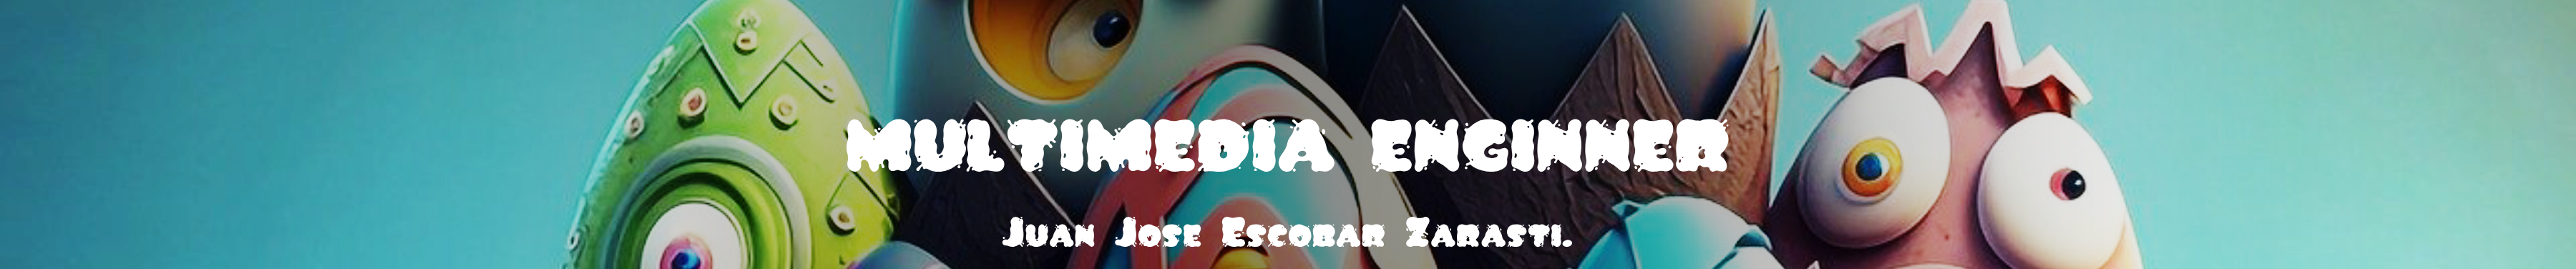 Juan Jose Escobar Zarasti's profile banner